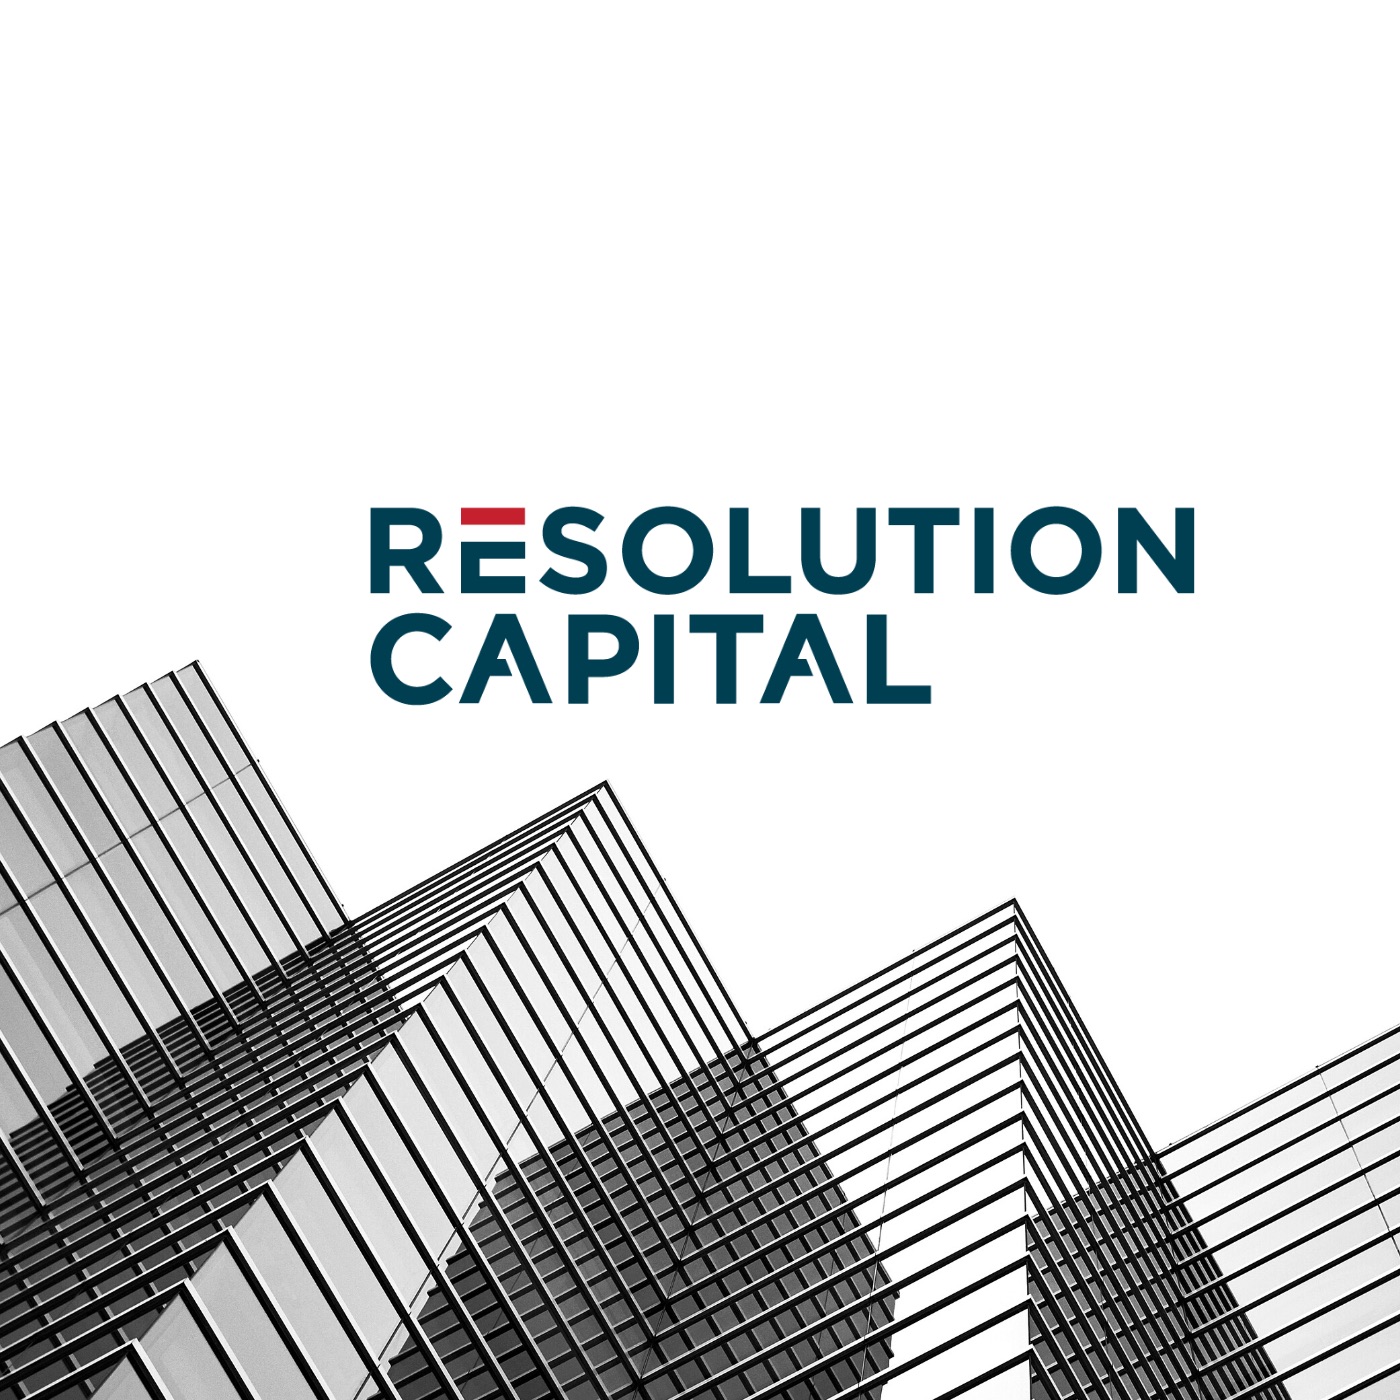 Resolution Capital